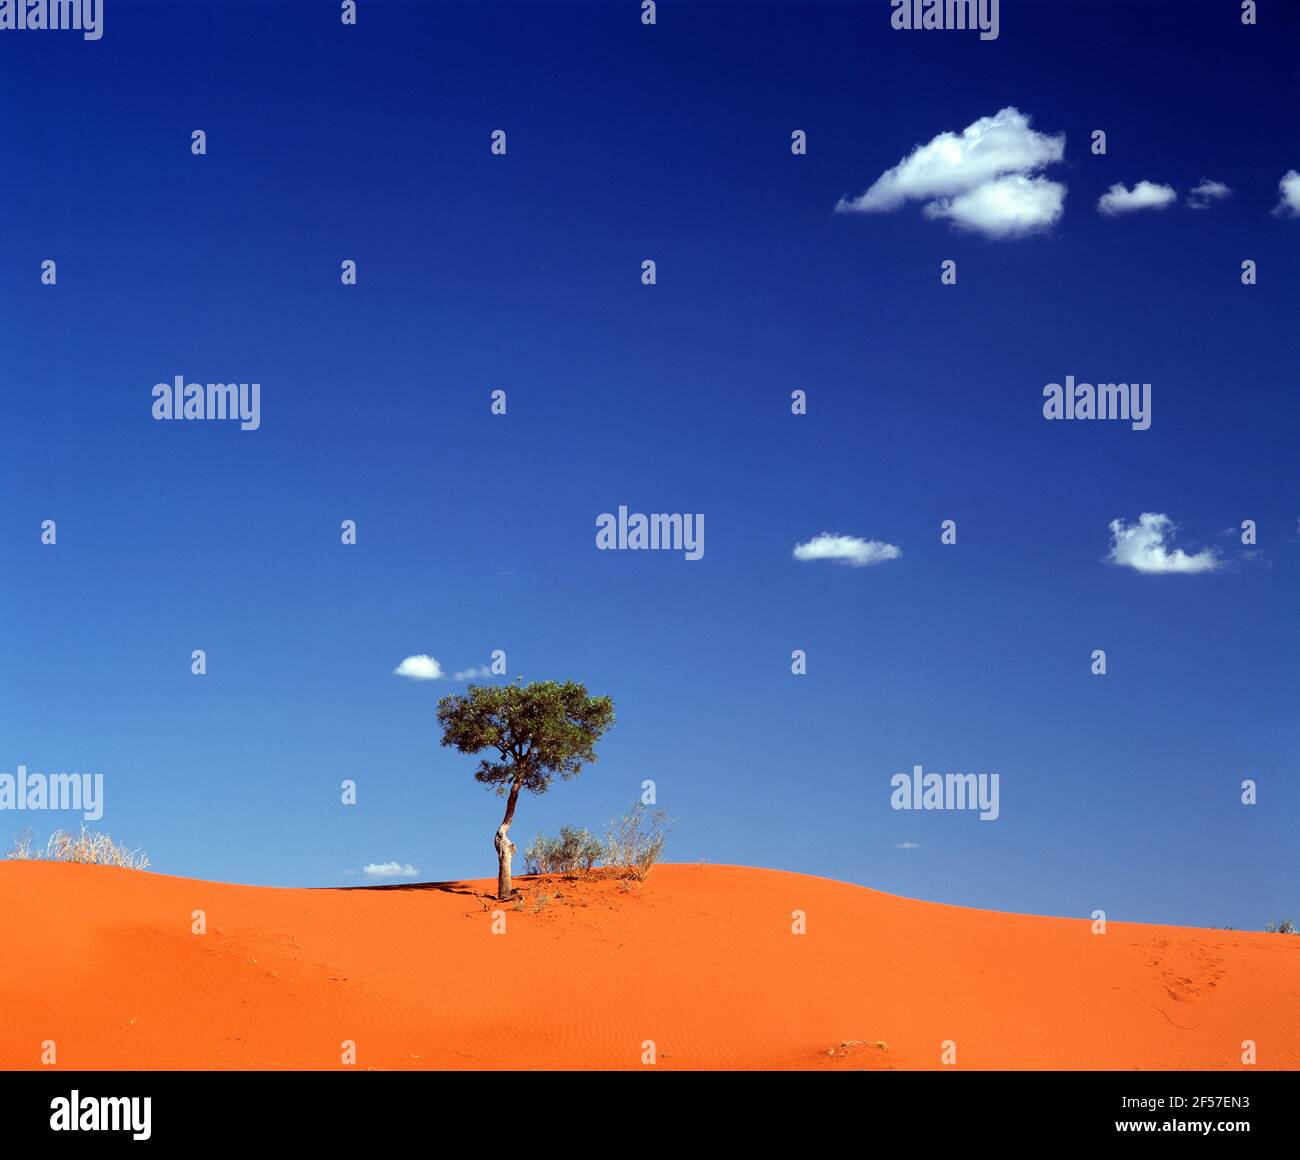 Australia. Queensland. Windorah sand dunes landscape with lone tree. Stock Photo